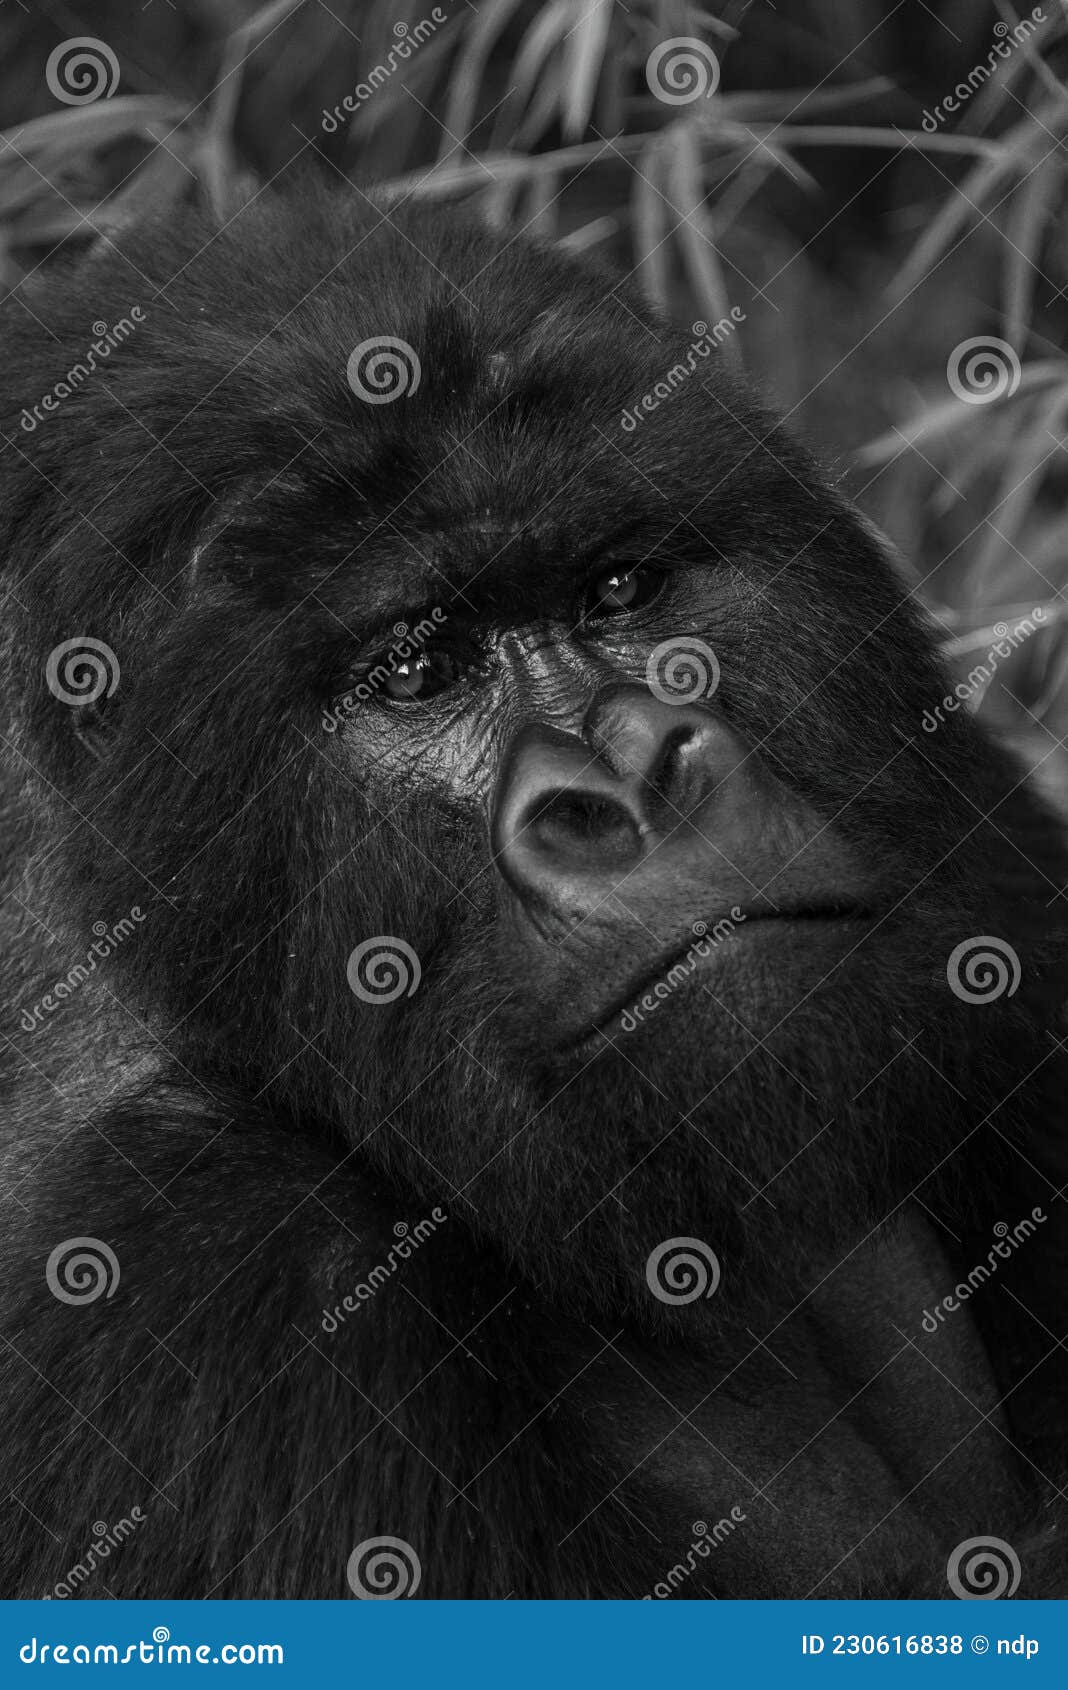 mono close-up of silverback gorilla eyeing camera